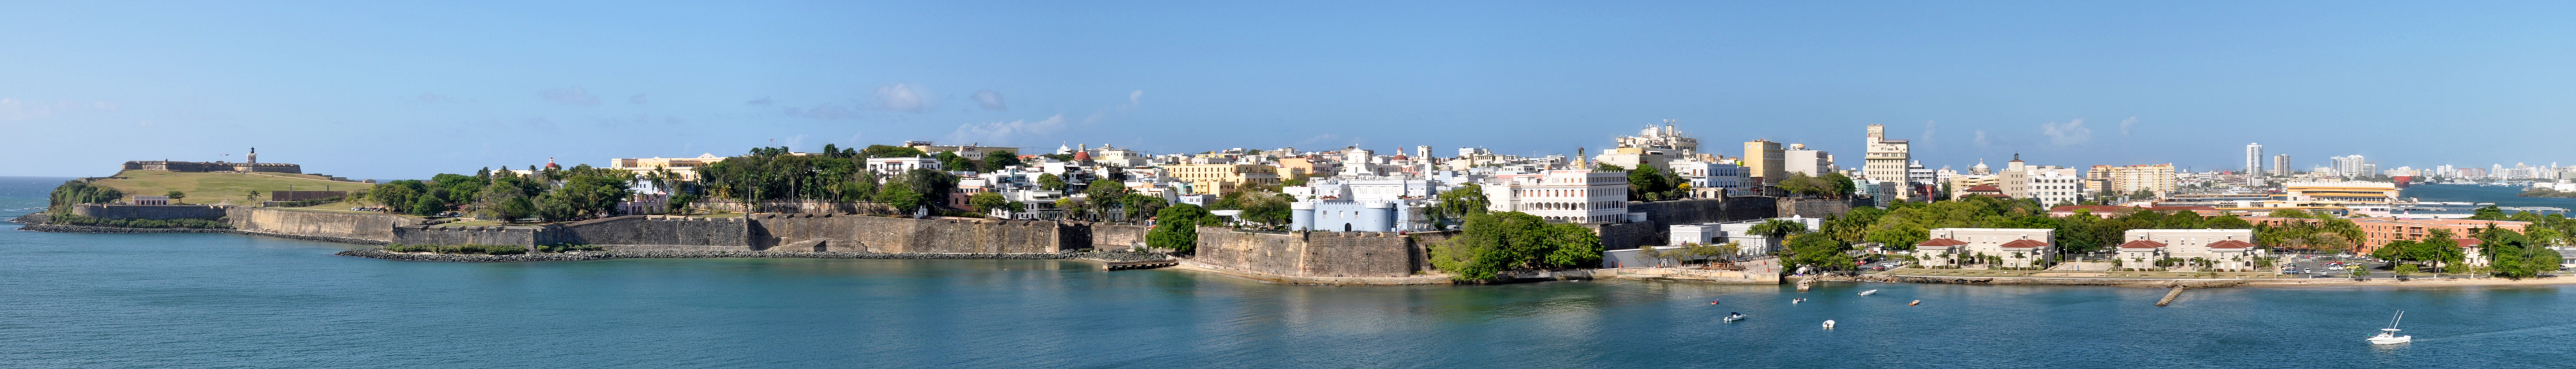 File:San Juan Puerto Rico Wikivoyage banner.jpg - Wikimedia Commons